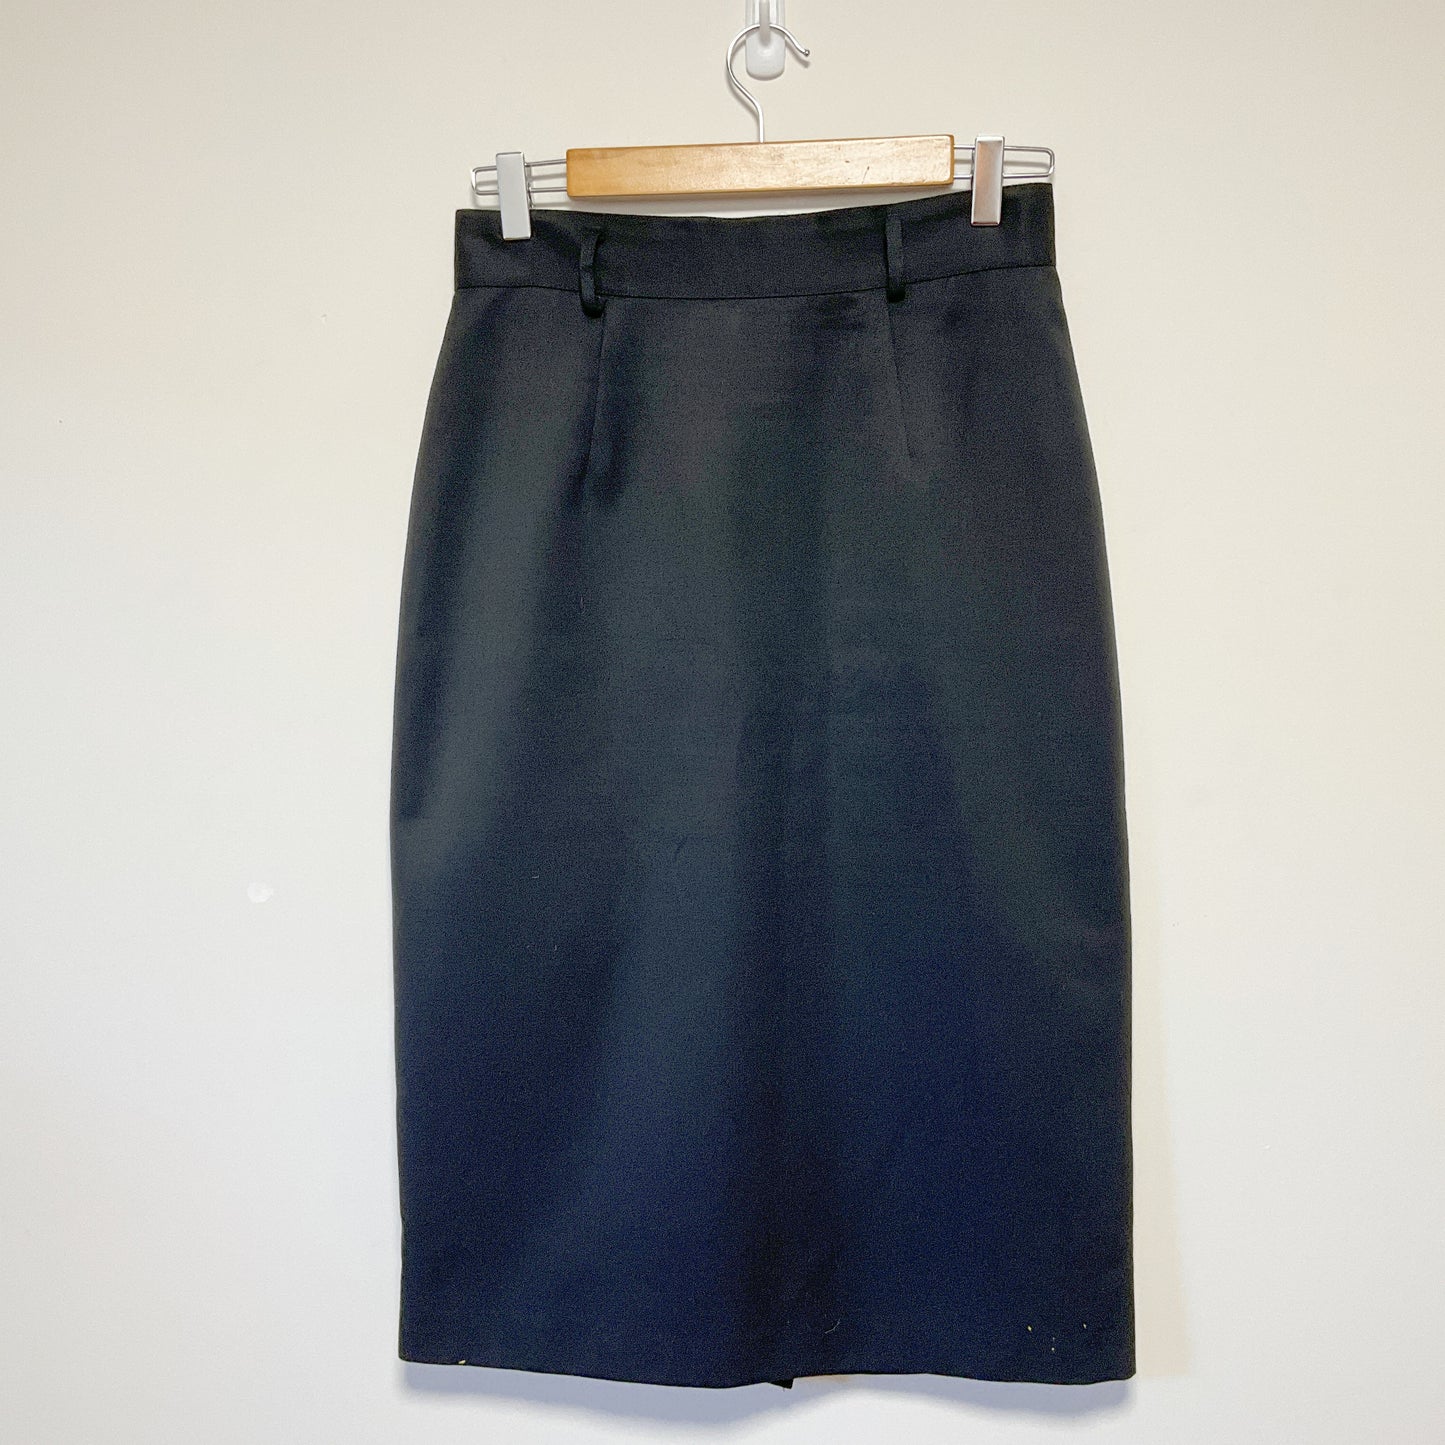 Katies - Black Pencil Skirt